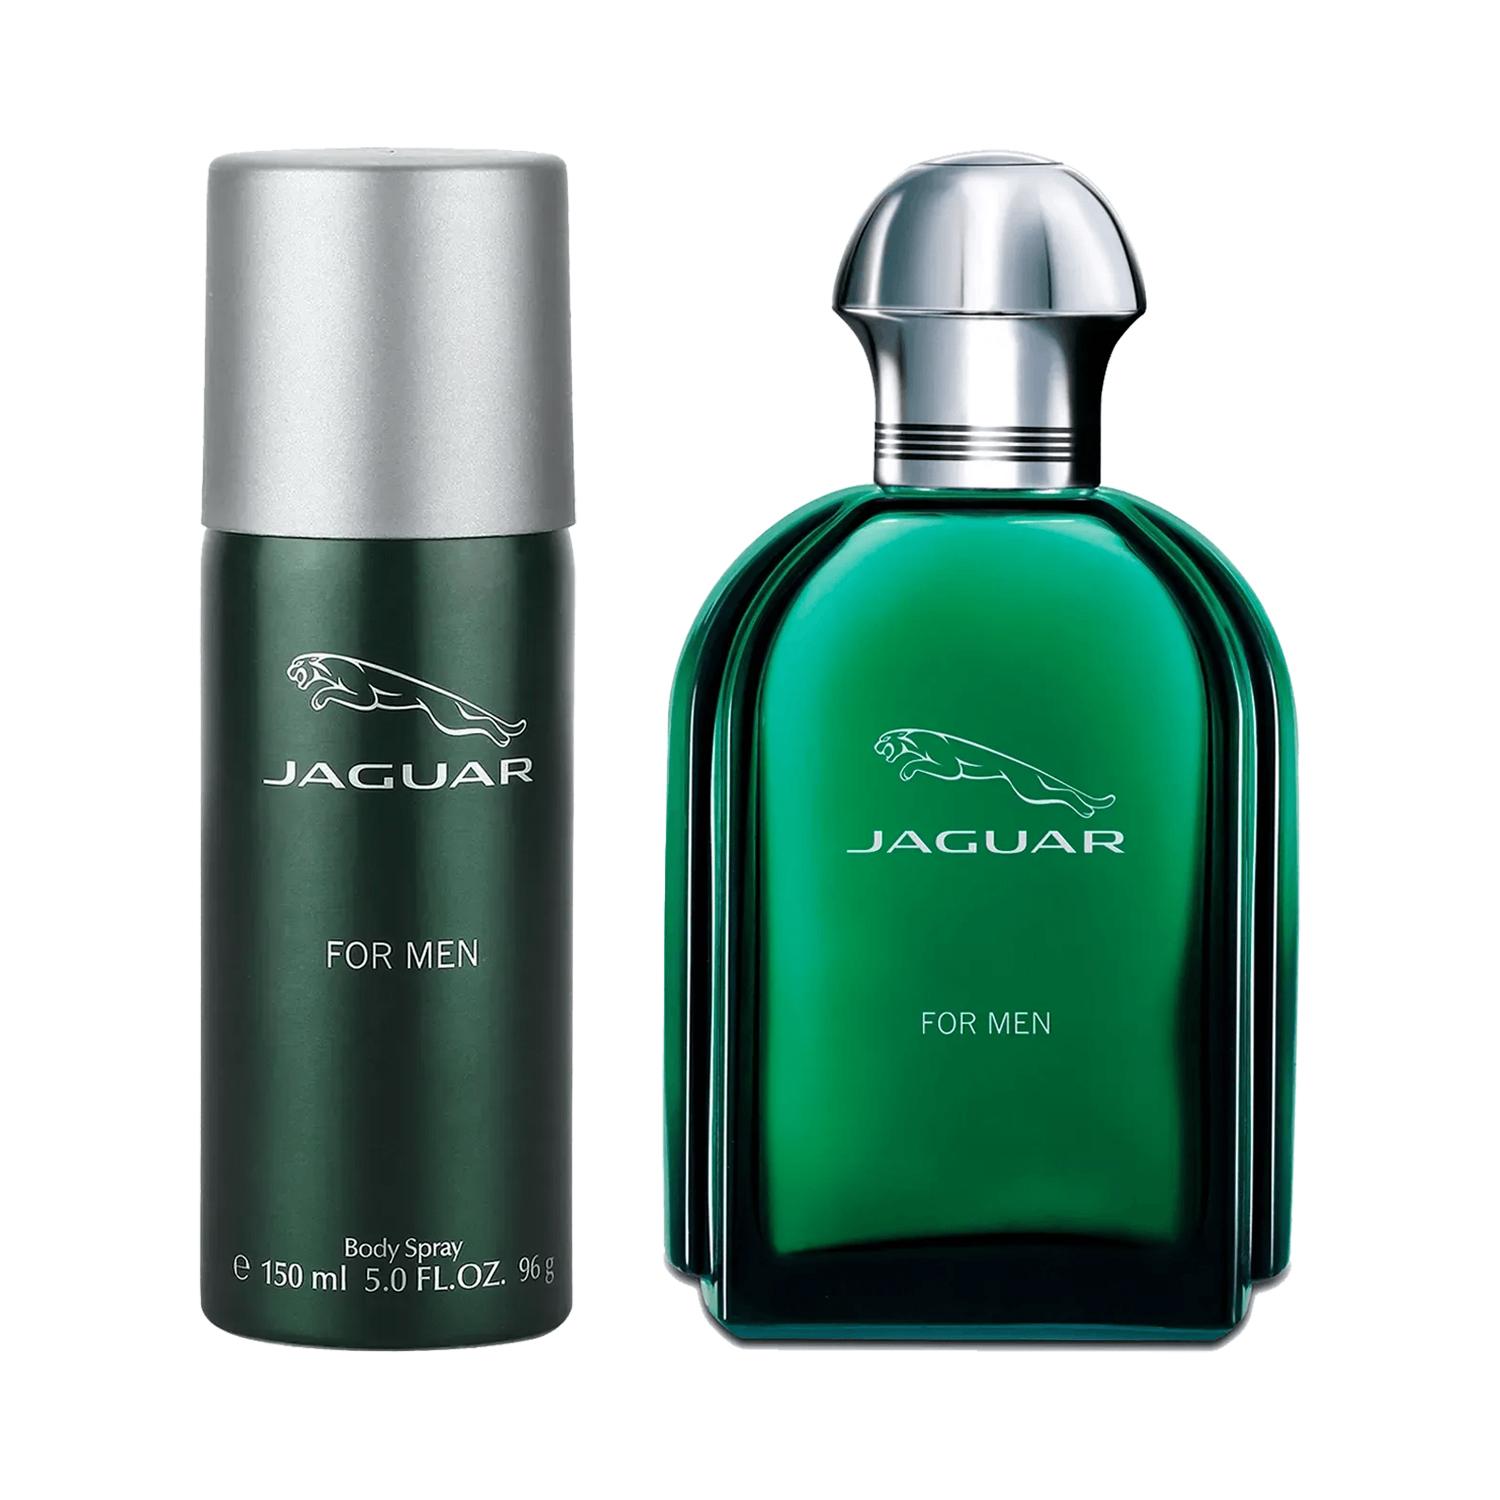 Jaguar | Jaguar For Men EDT + Deodorant (Pack of 2) Combo